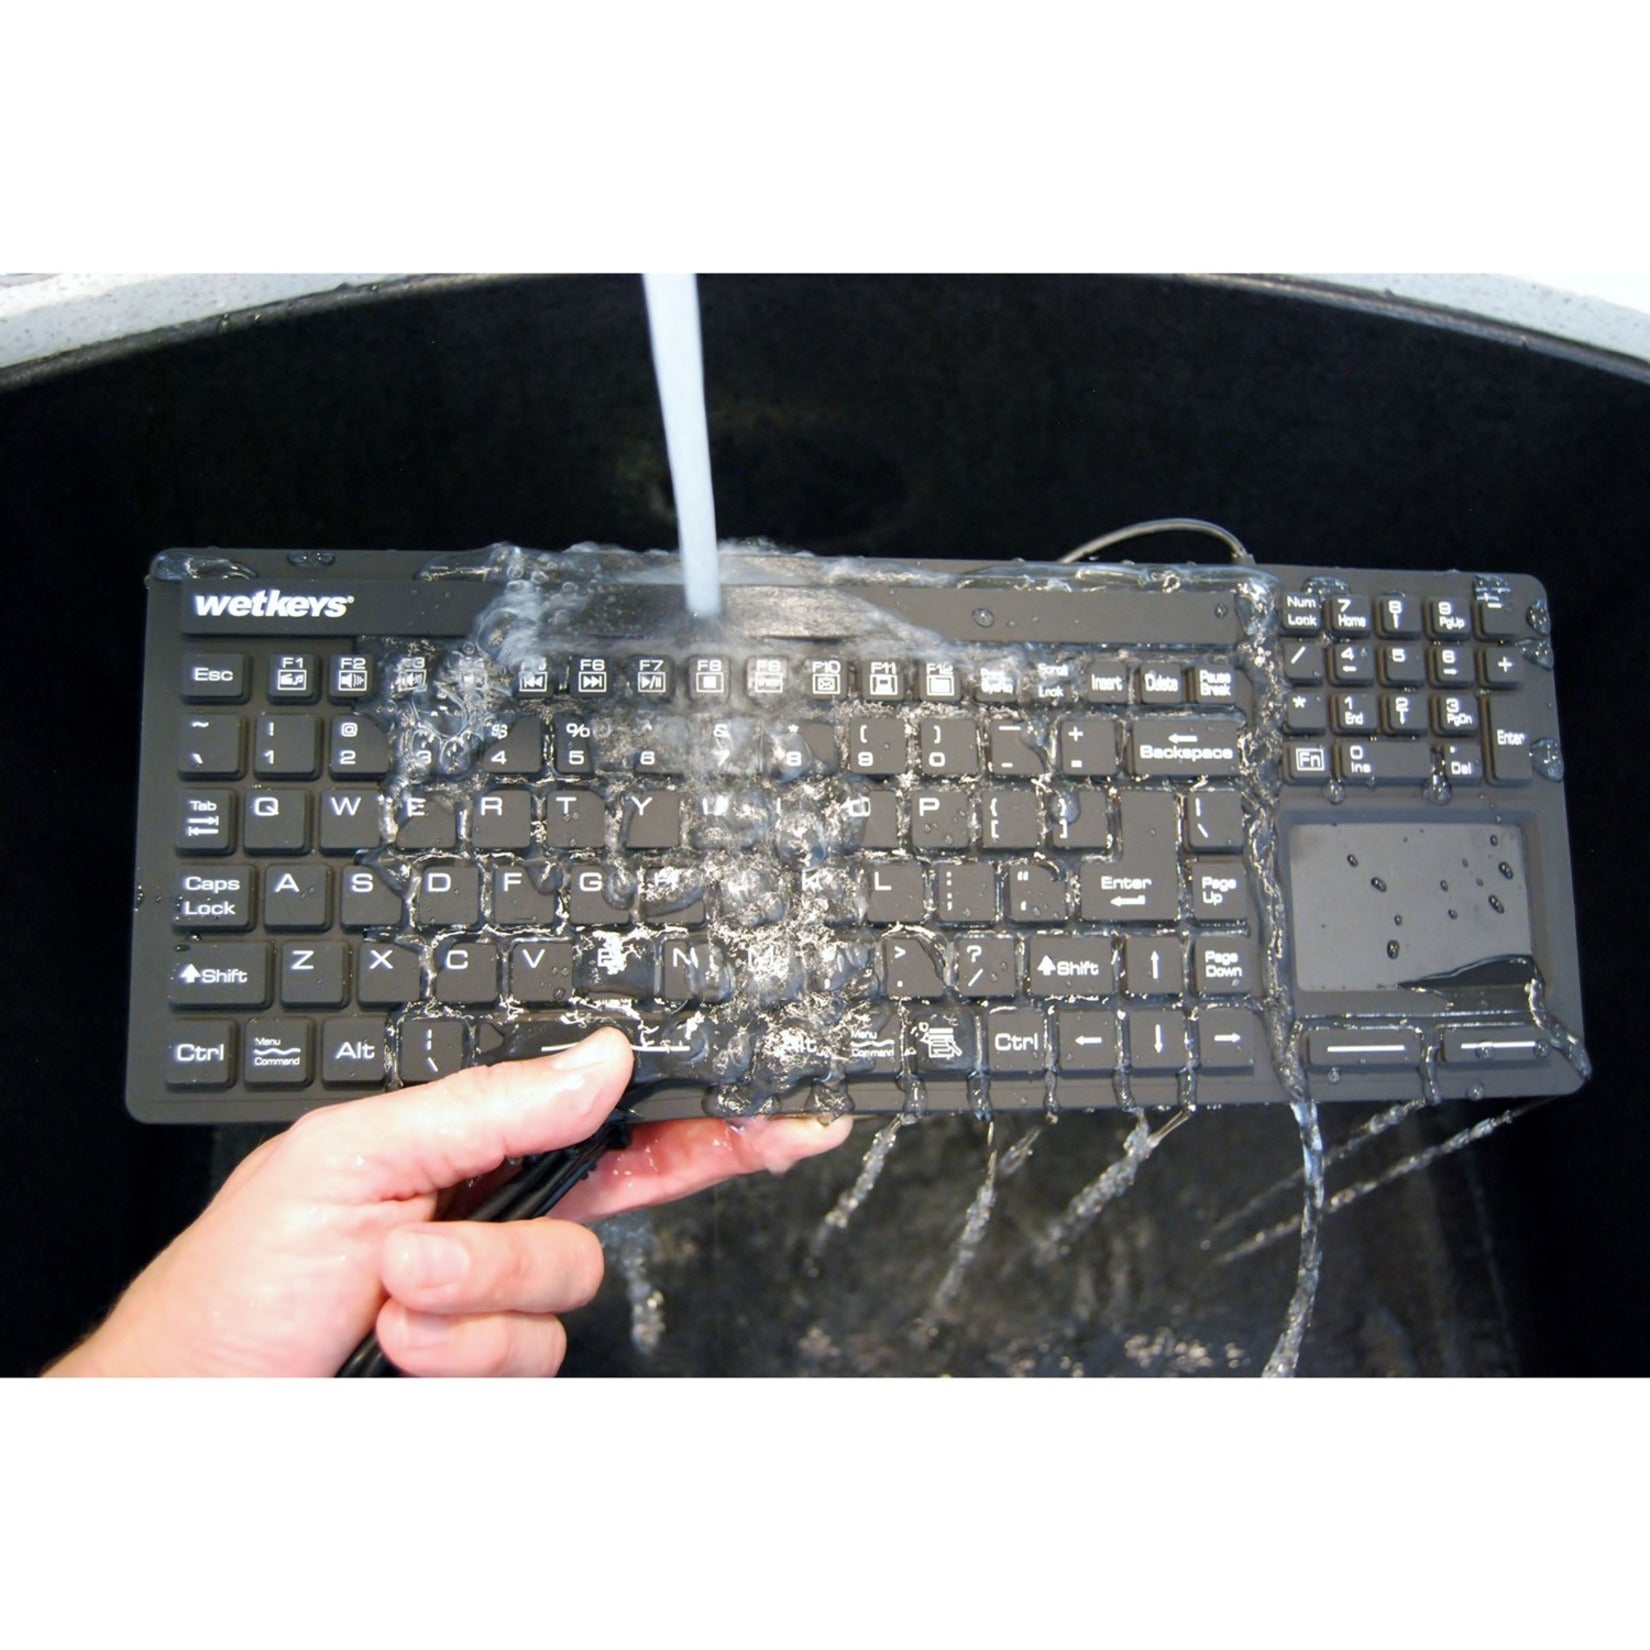 WetKeys Washable Keyboards KBWKRC106T-BK Waterproof "Touchpad Plus" Pro-grade Keyboard w/Touchpad (USB) - Black, Dustproof, Waterproof, Chemical Resistant and Washable